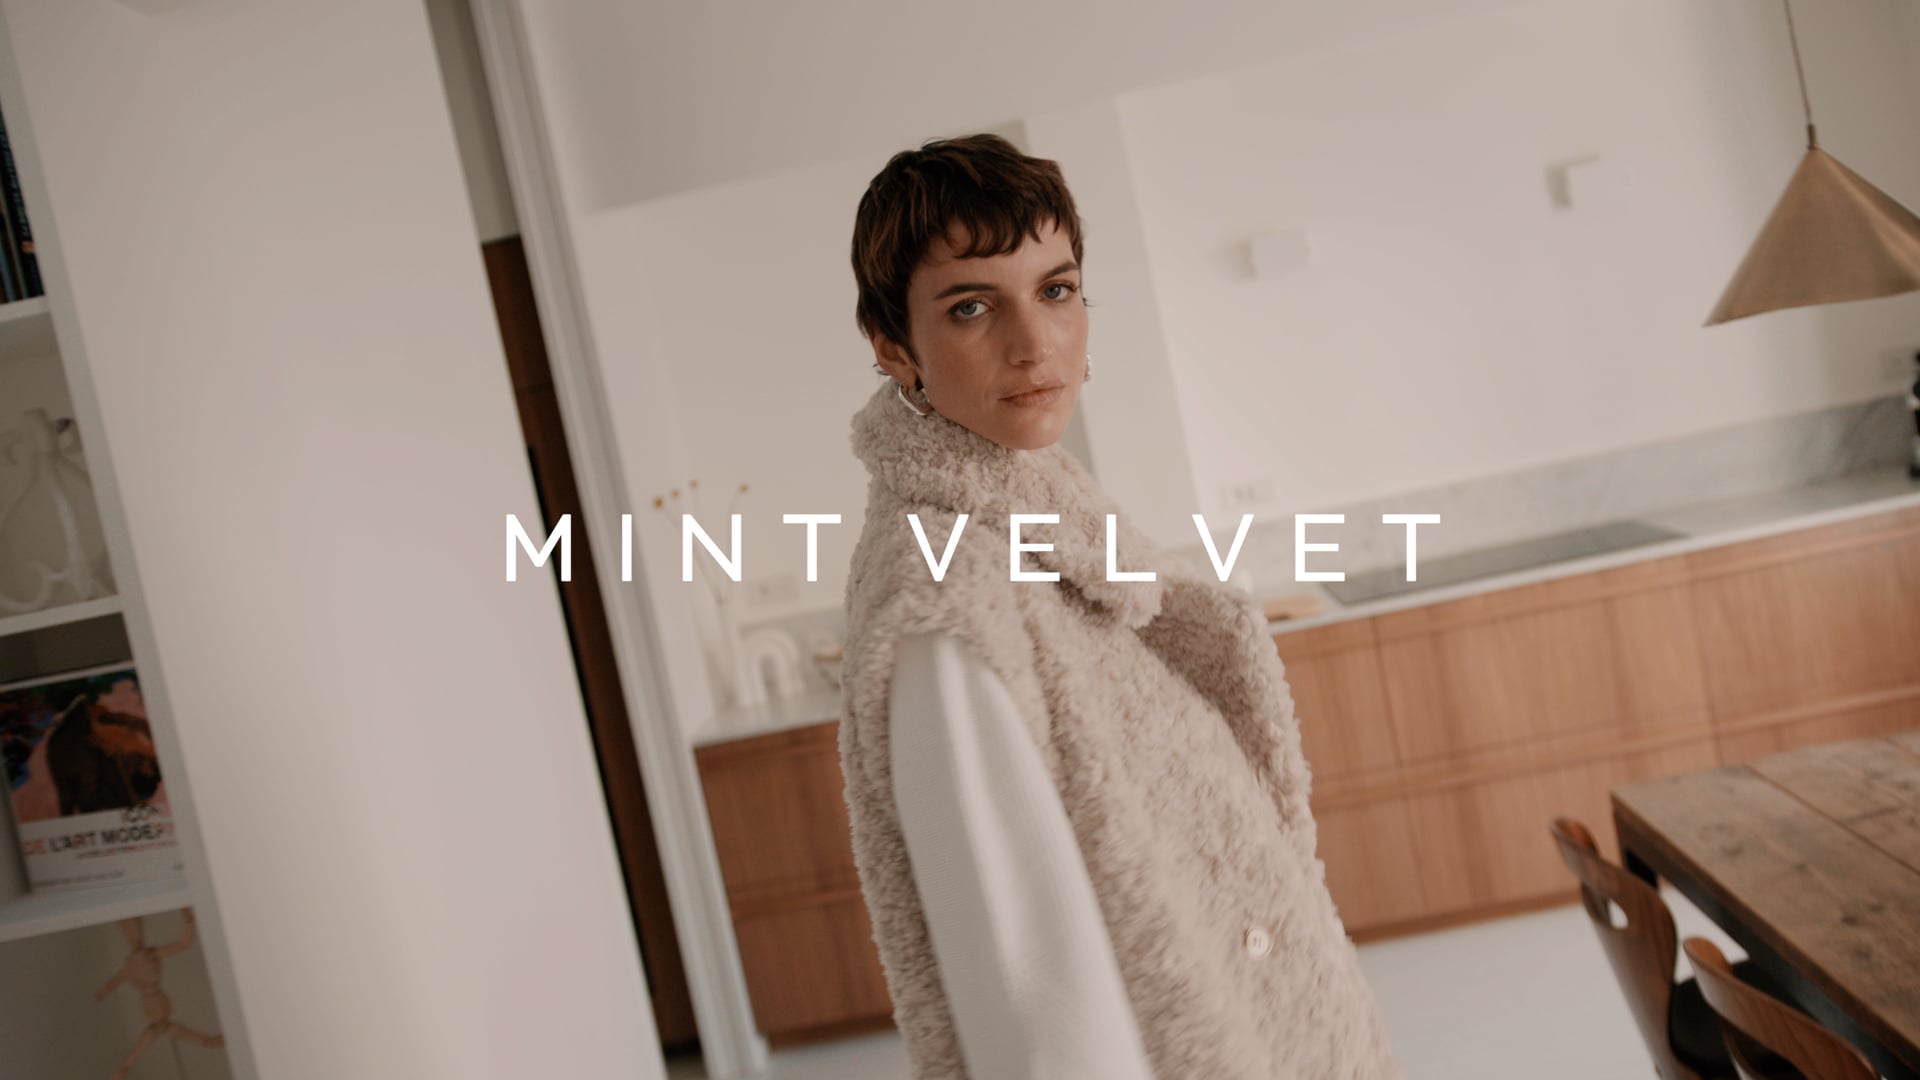 Mint Velvet - A Day in Paris (Director's Cut)